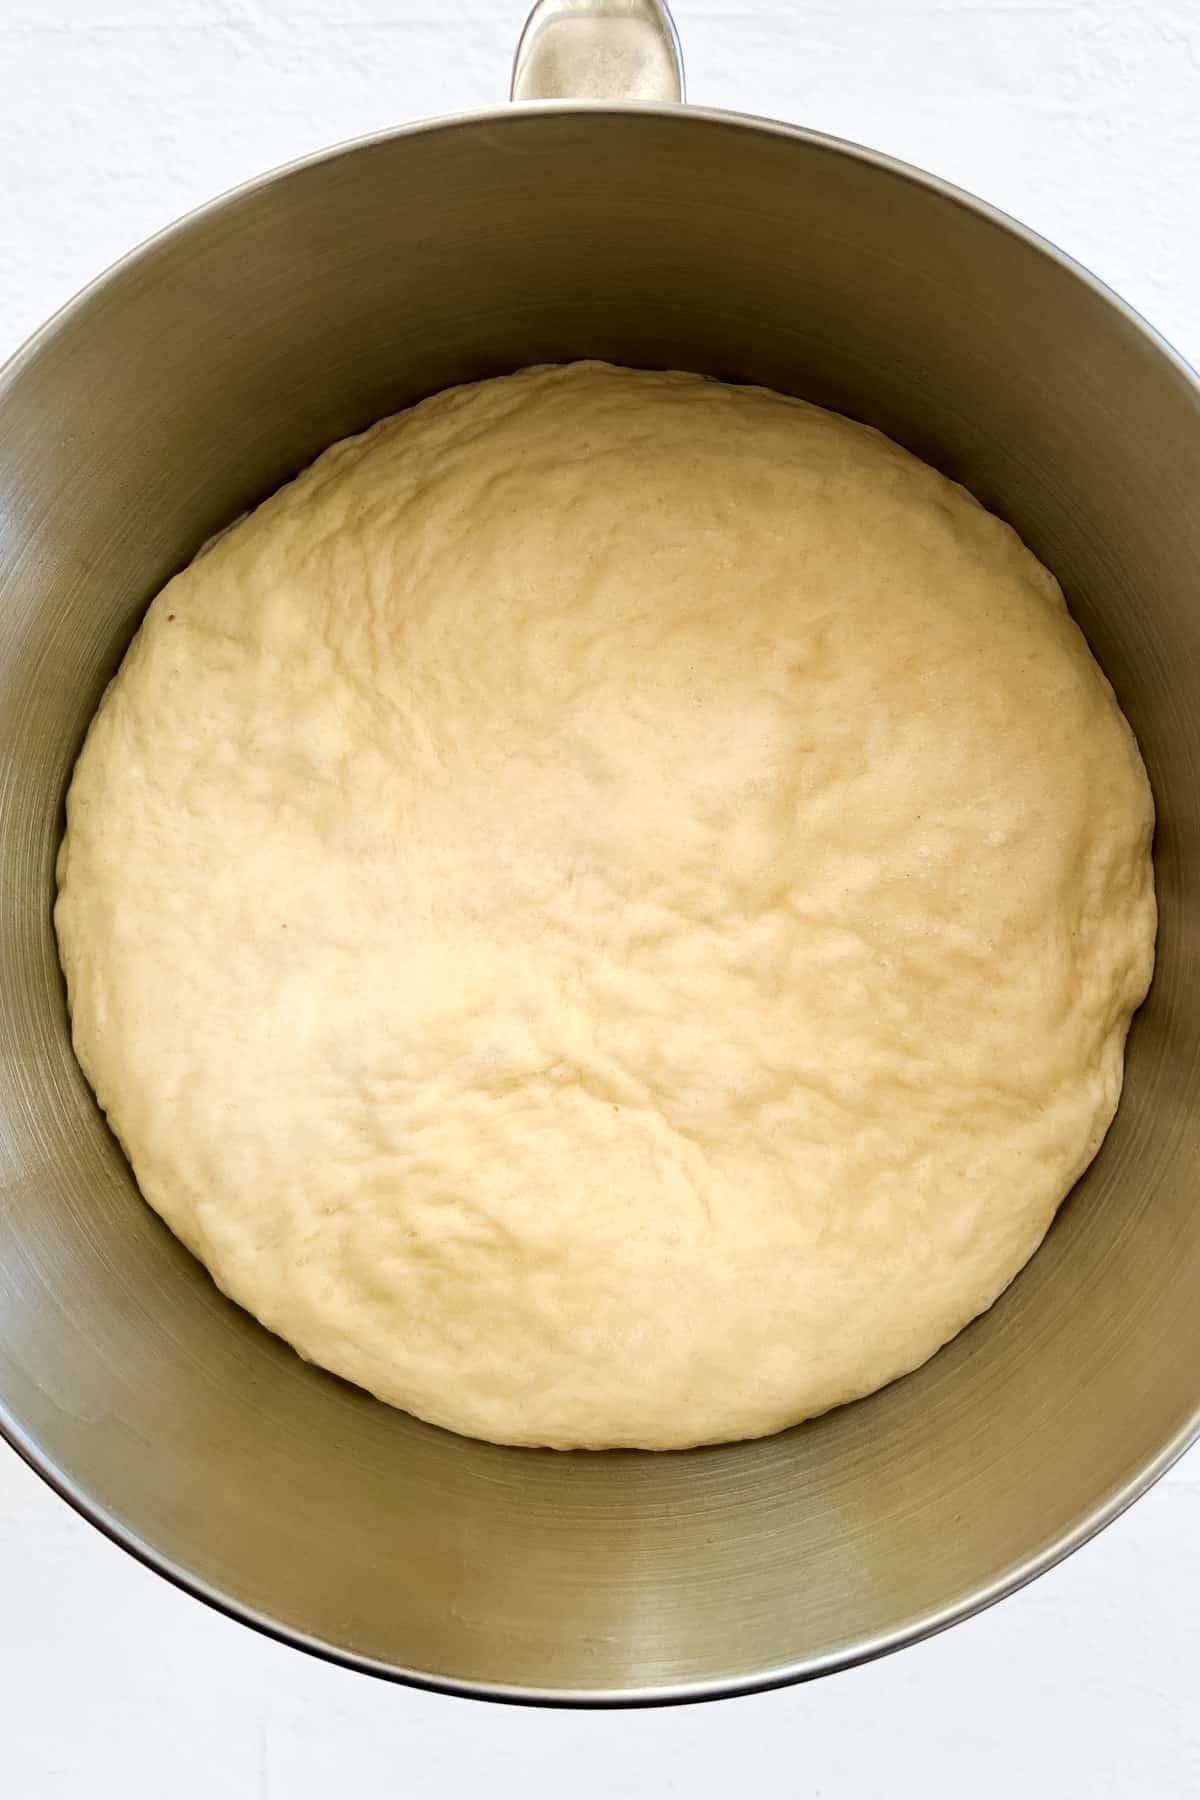 risen dough in a silver bowl